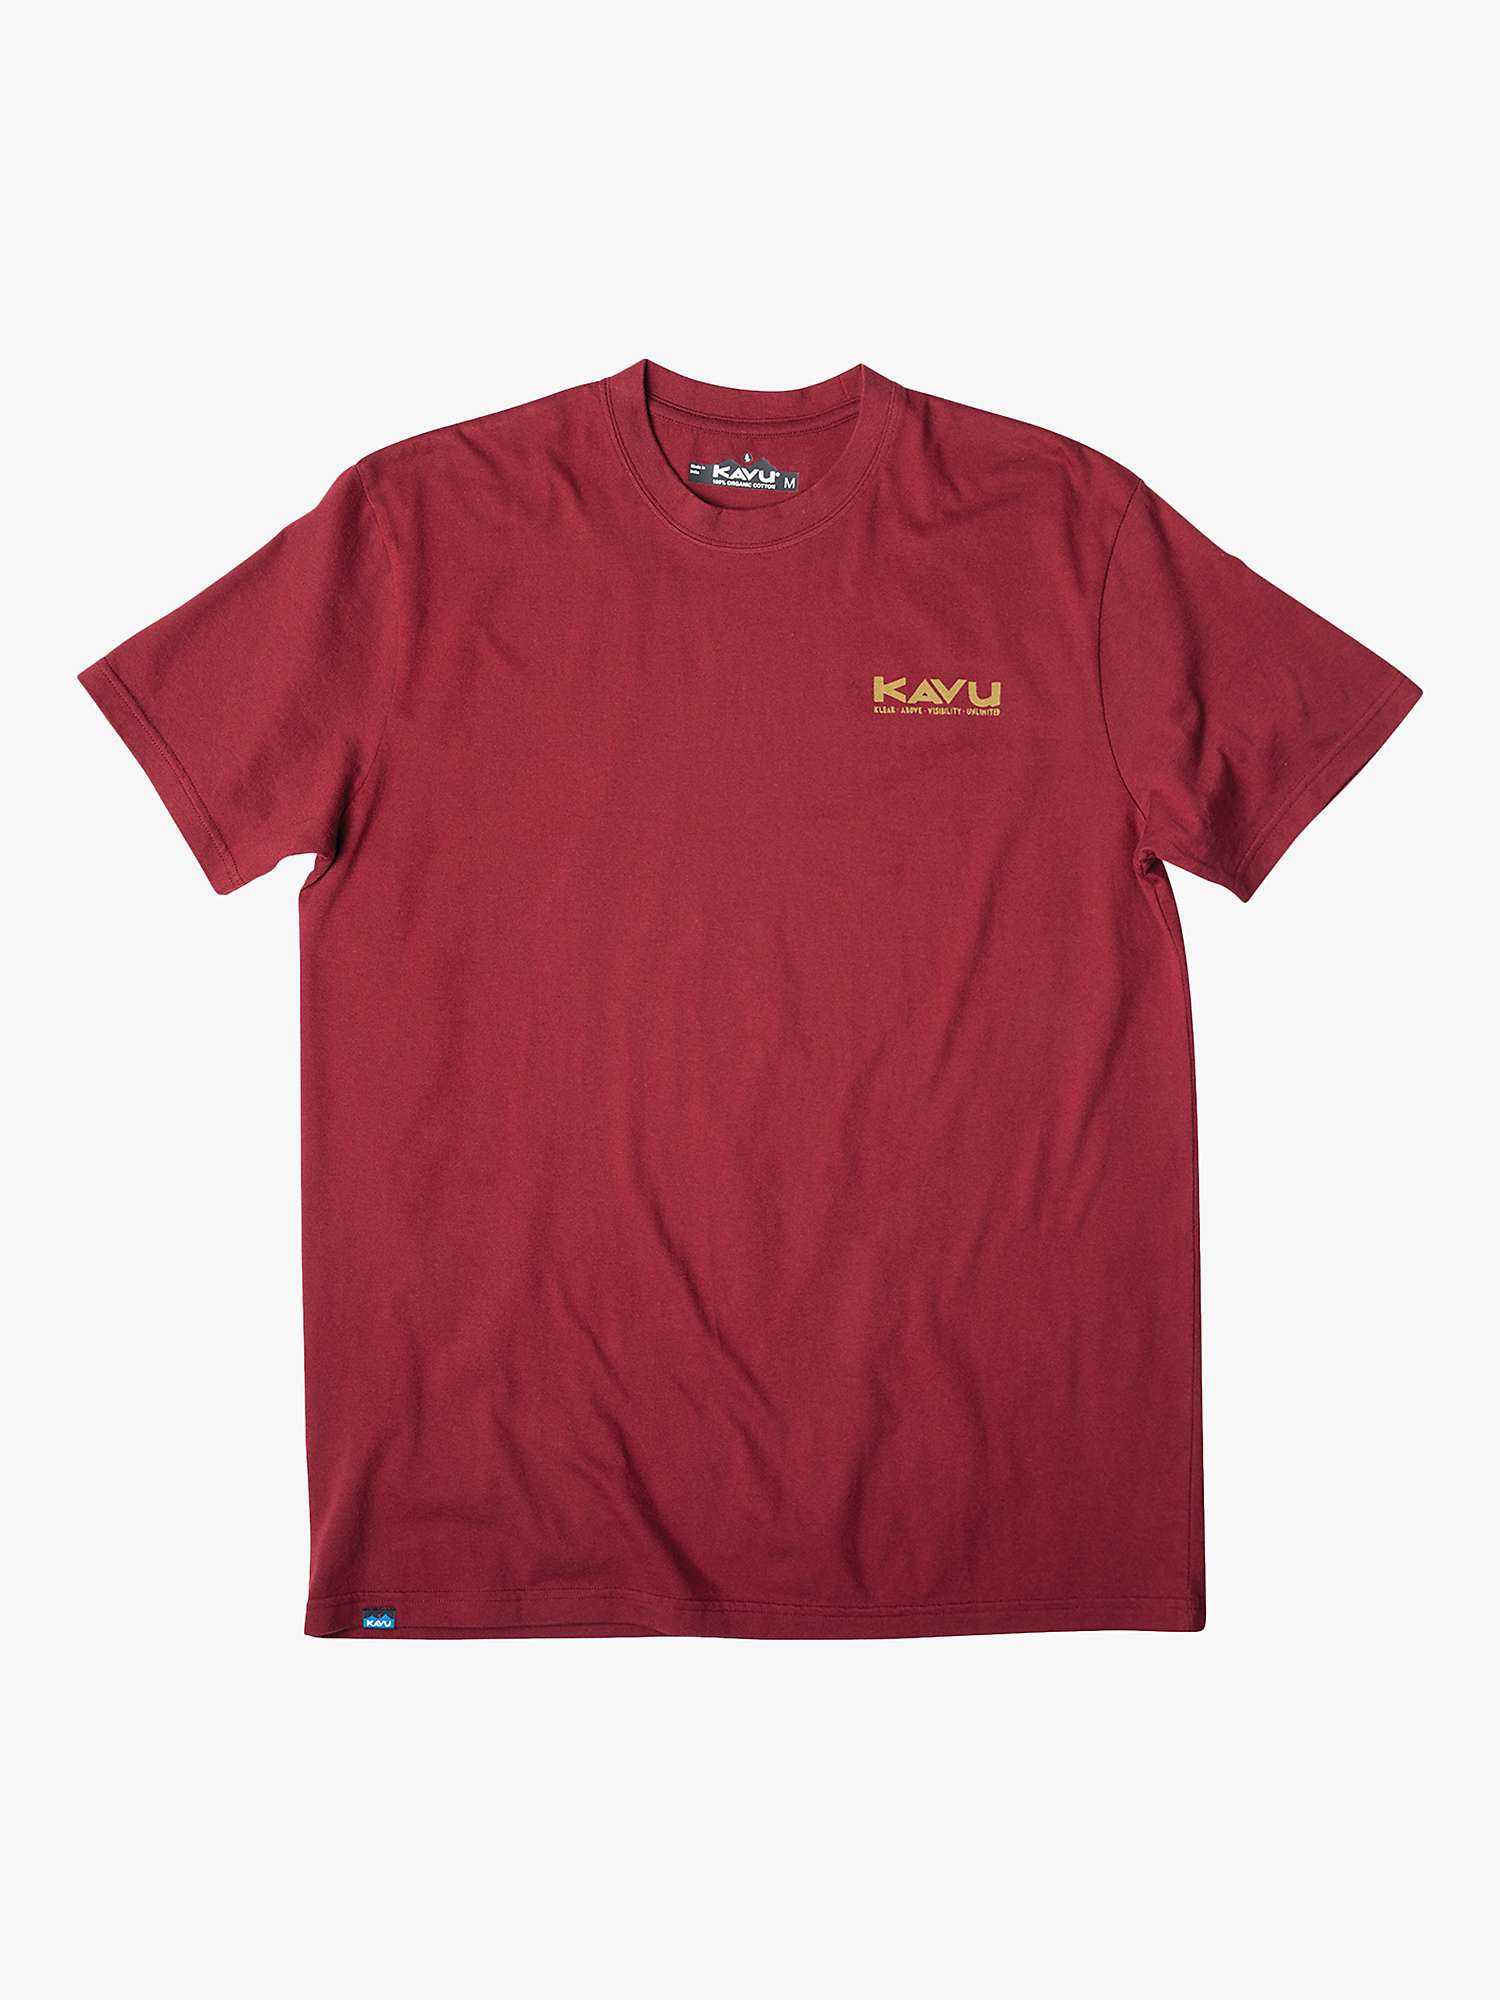 Buy KAVU Doddle Days Organic Cotton Short Sleeve T-Shirt, Port Online at johnlewis.com